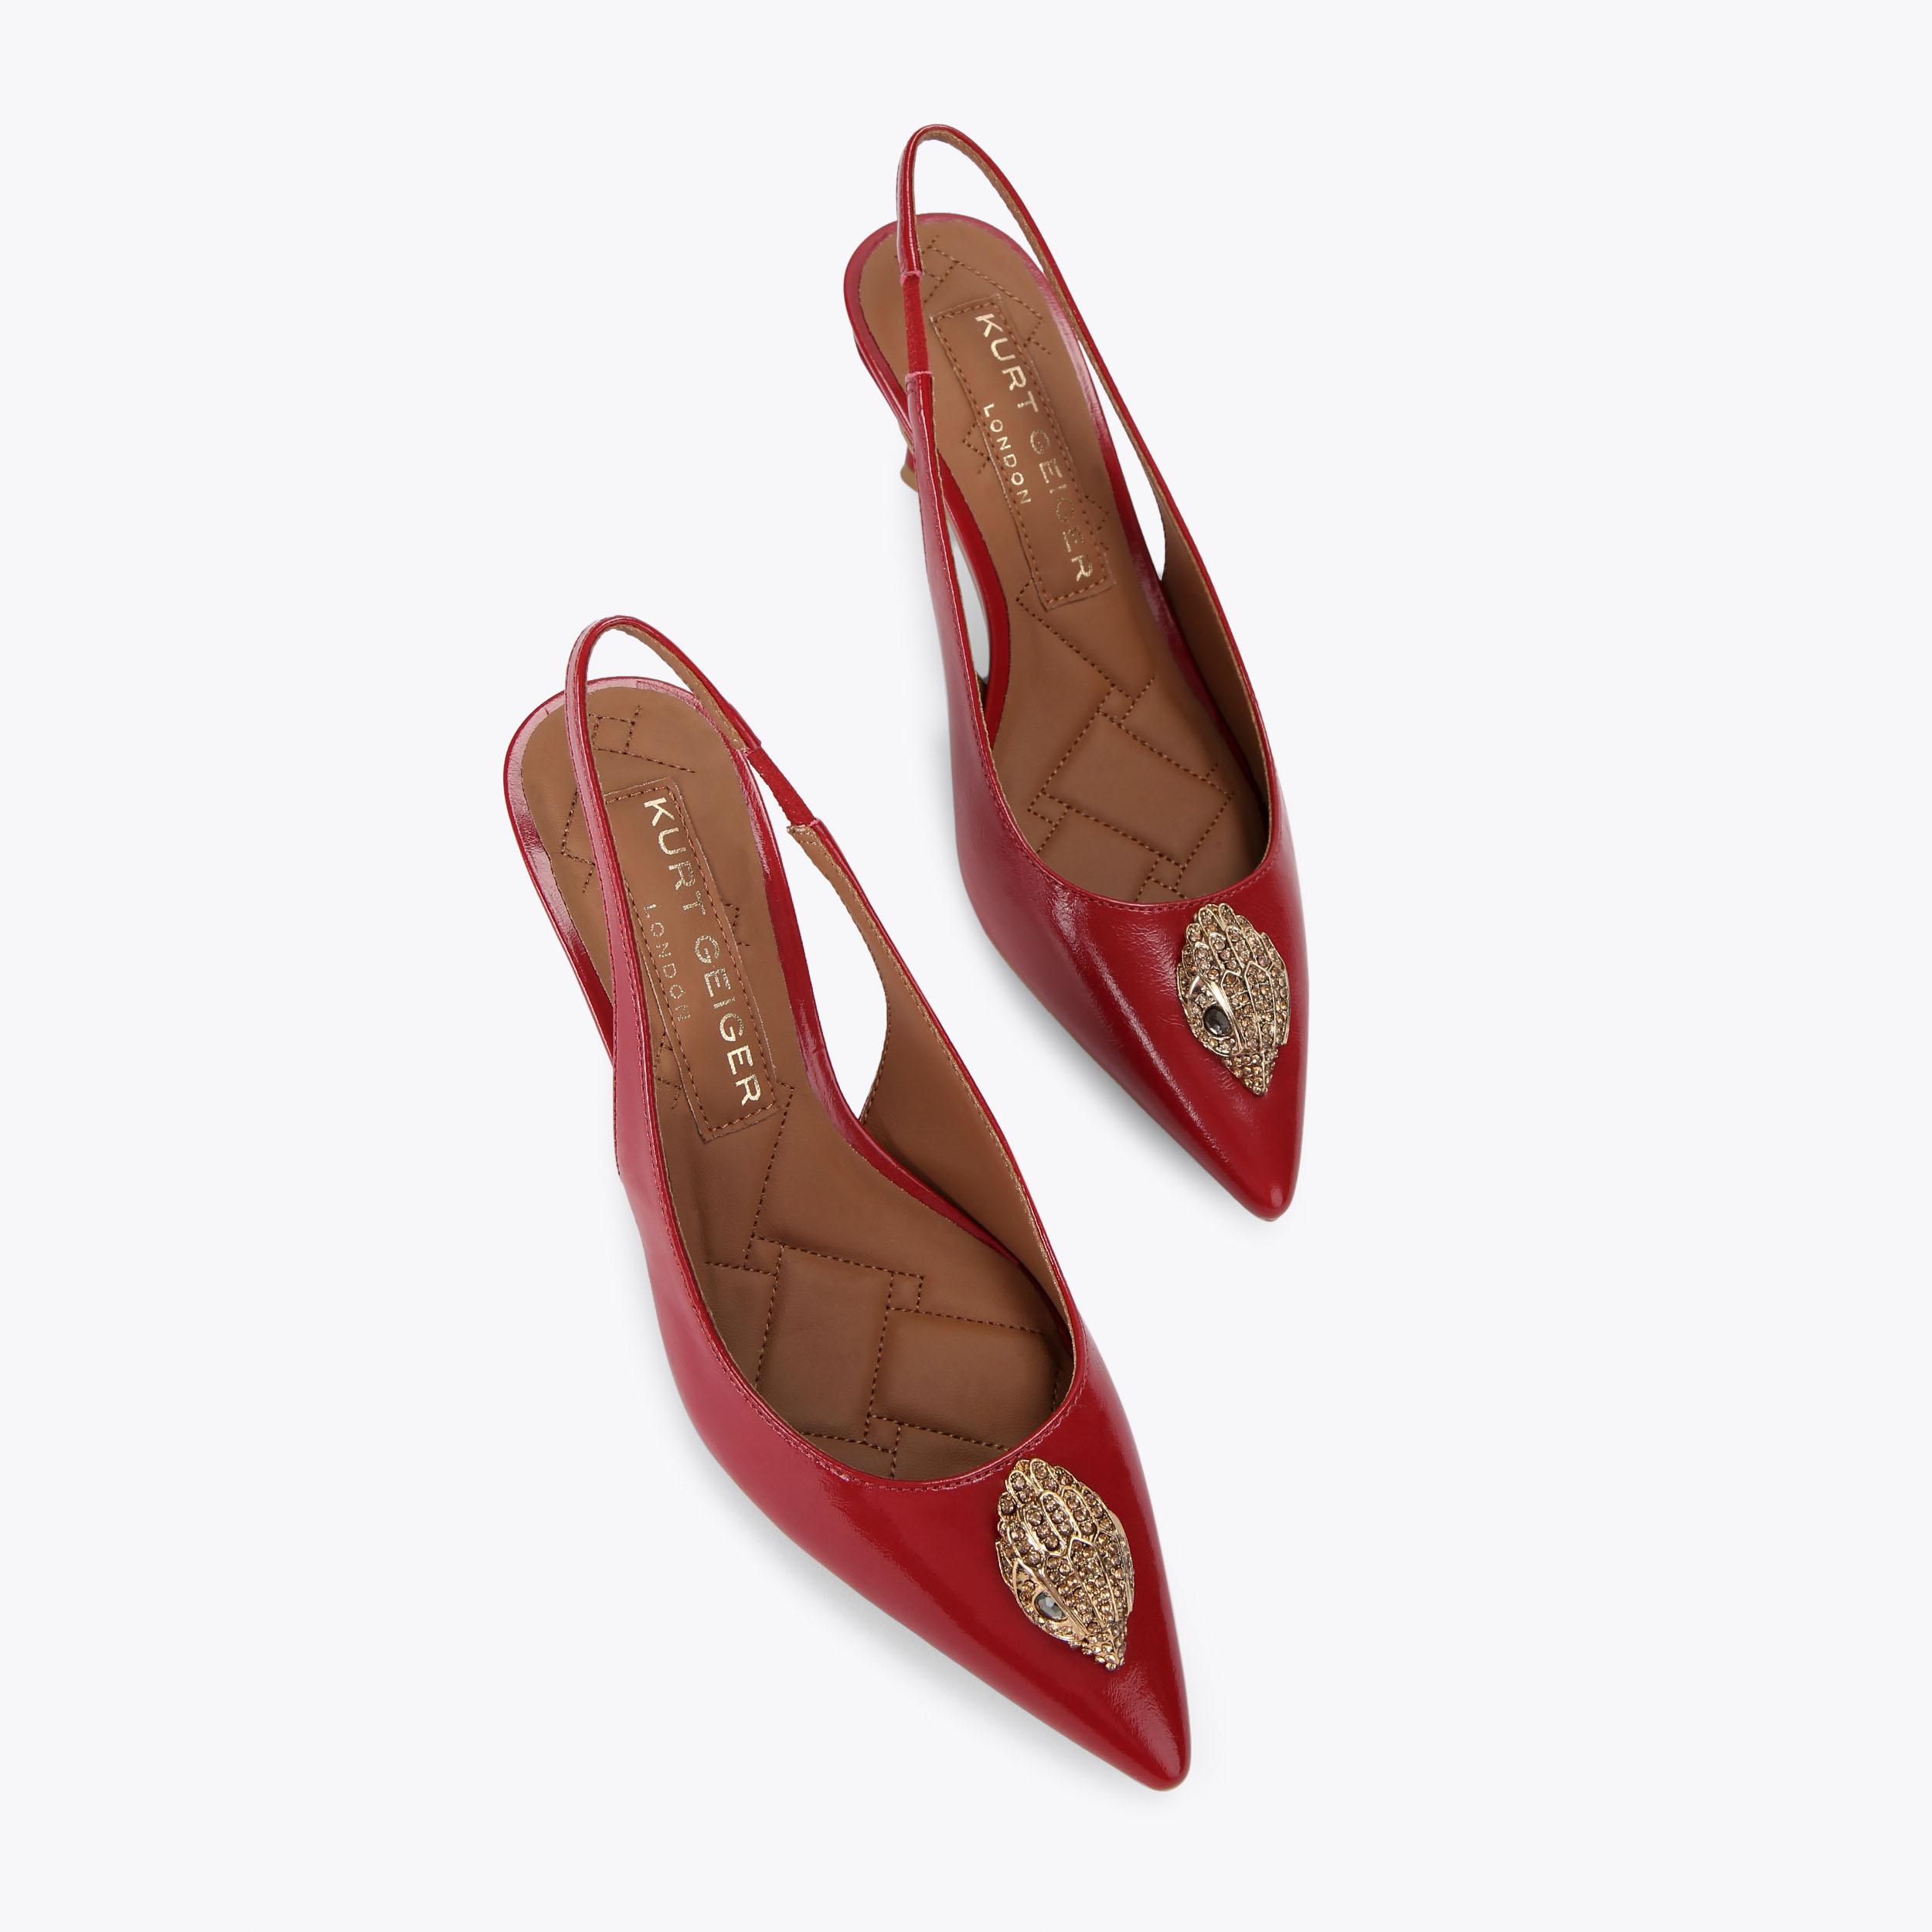 BELGRAVIA SLING BACK Red Patent Slingback heel by KURT GEIGER LONDON